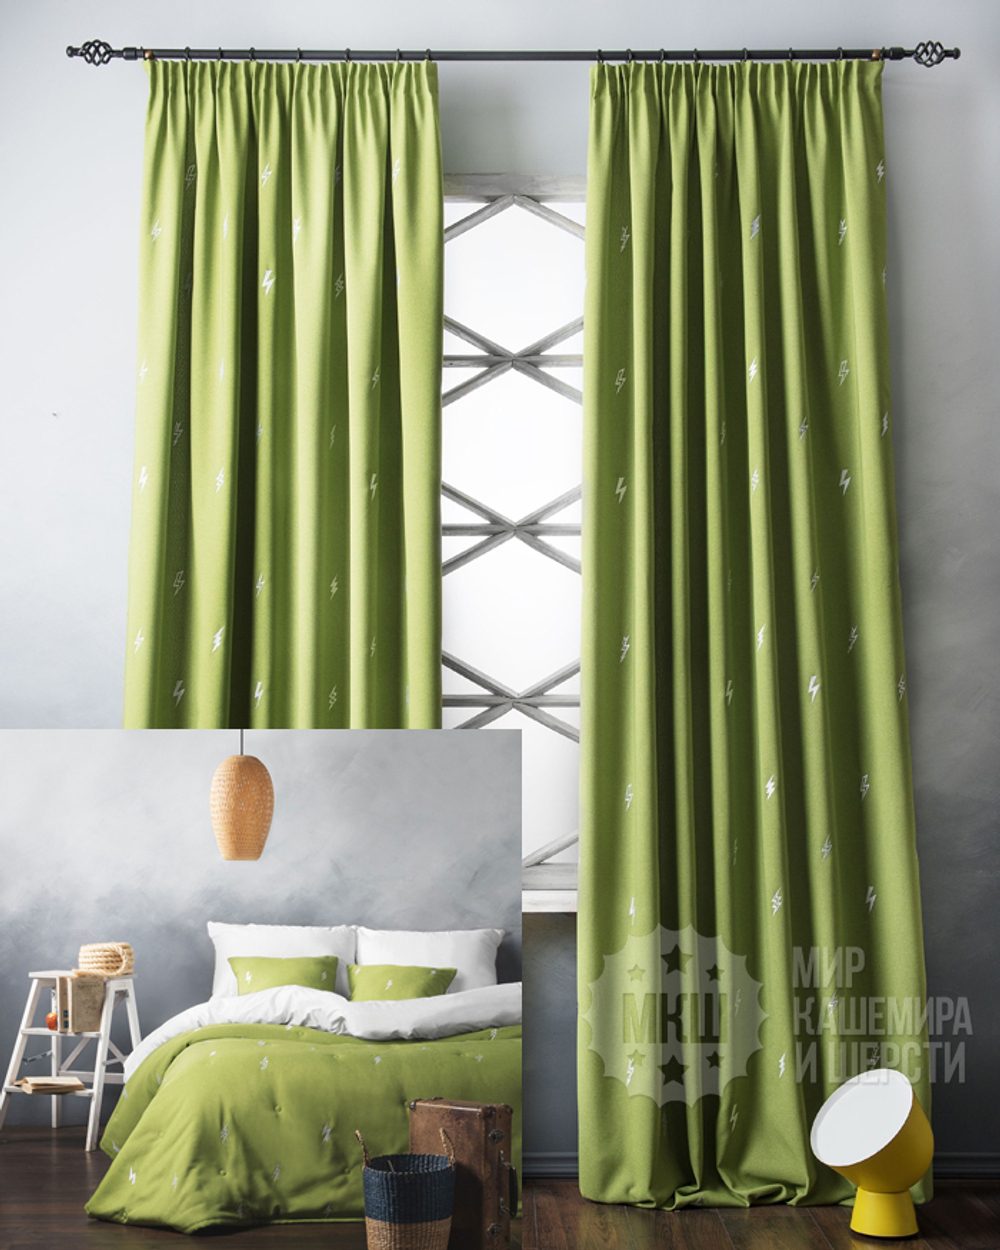 Комплект для спальни шторы и покрывало с вышивкой: ФЛЕШ (арт. BL10-246-04)  - (145х280)х2 см., покрывало 230х250 см. - зеленый